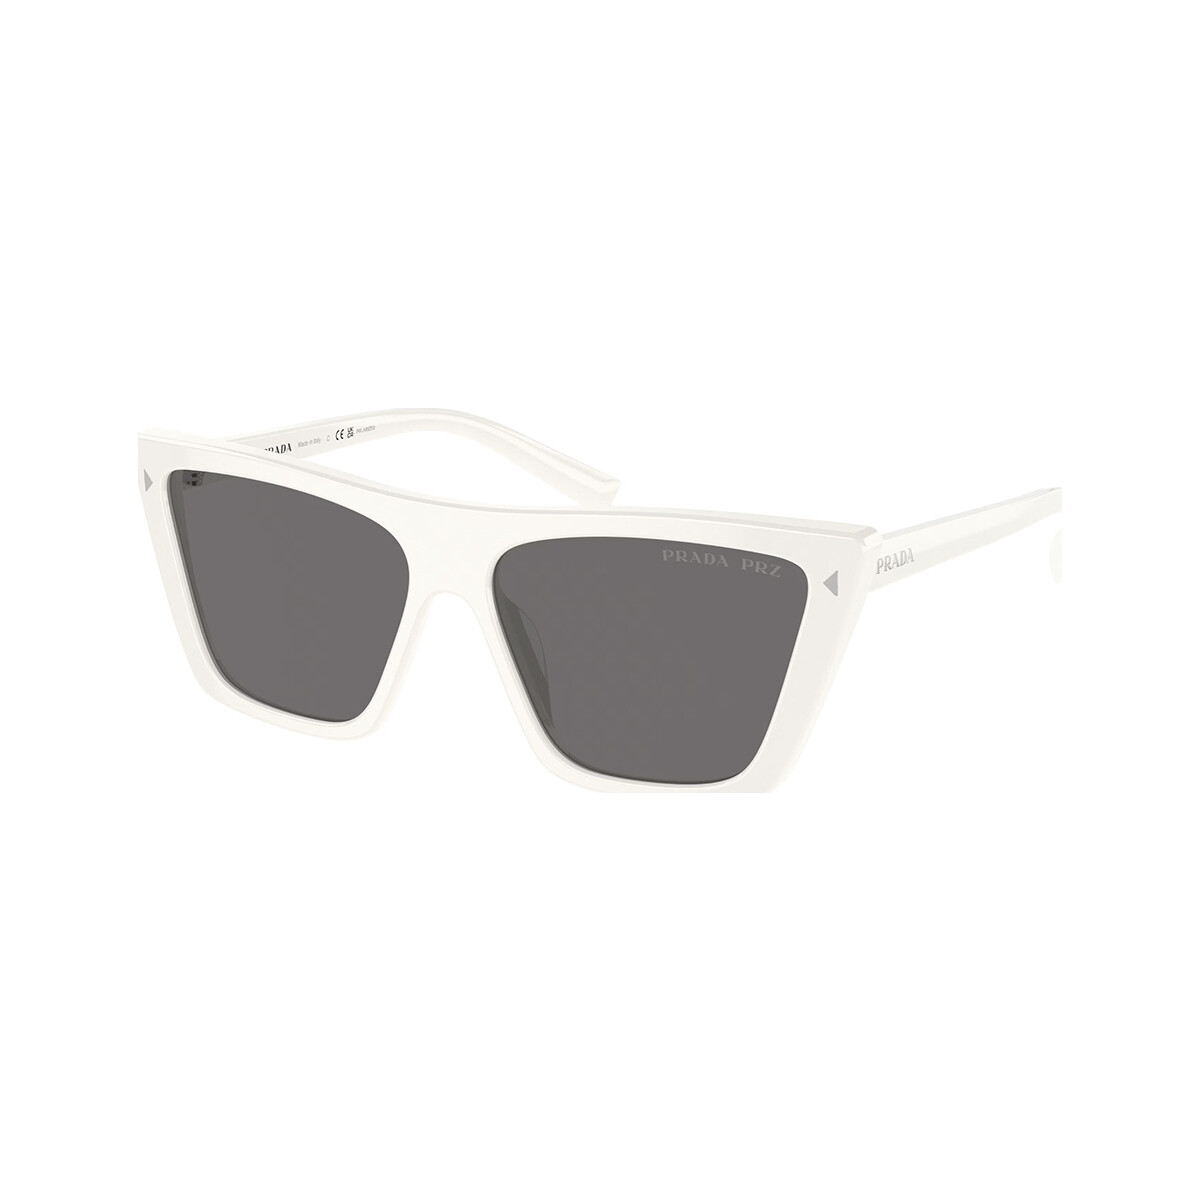 PRADA aus EYEWEAR PR 05YS round-shape sunglasses Lunettes de soleil Prada aus PR 21ZS Lunettes de soleil, Blanc/Gris, 55 mm Blanc